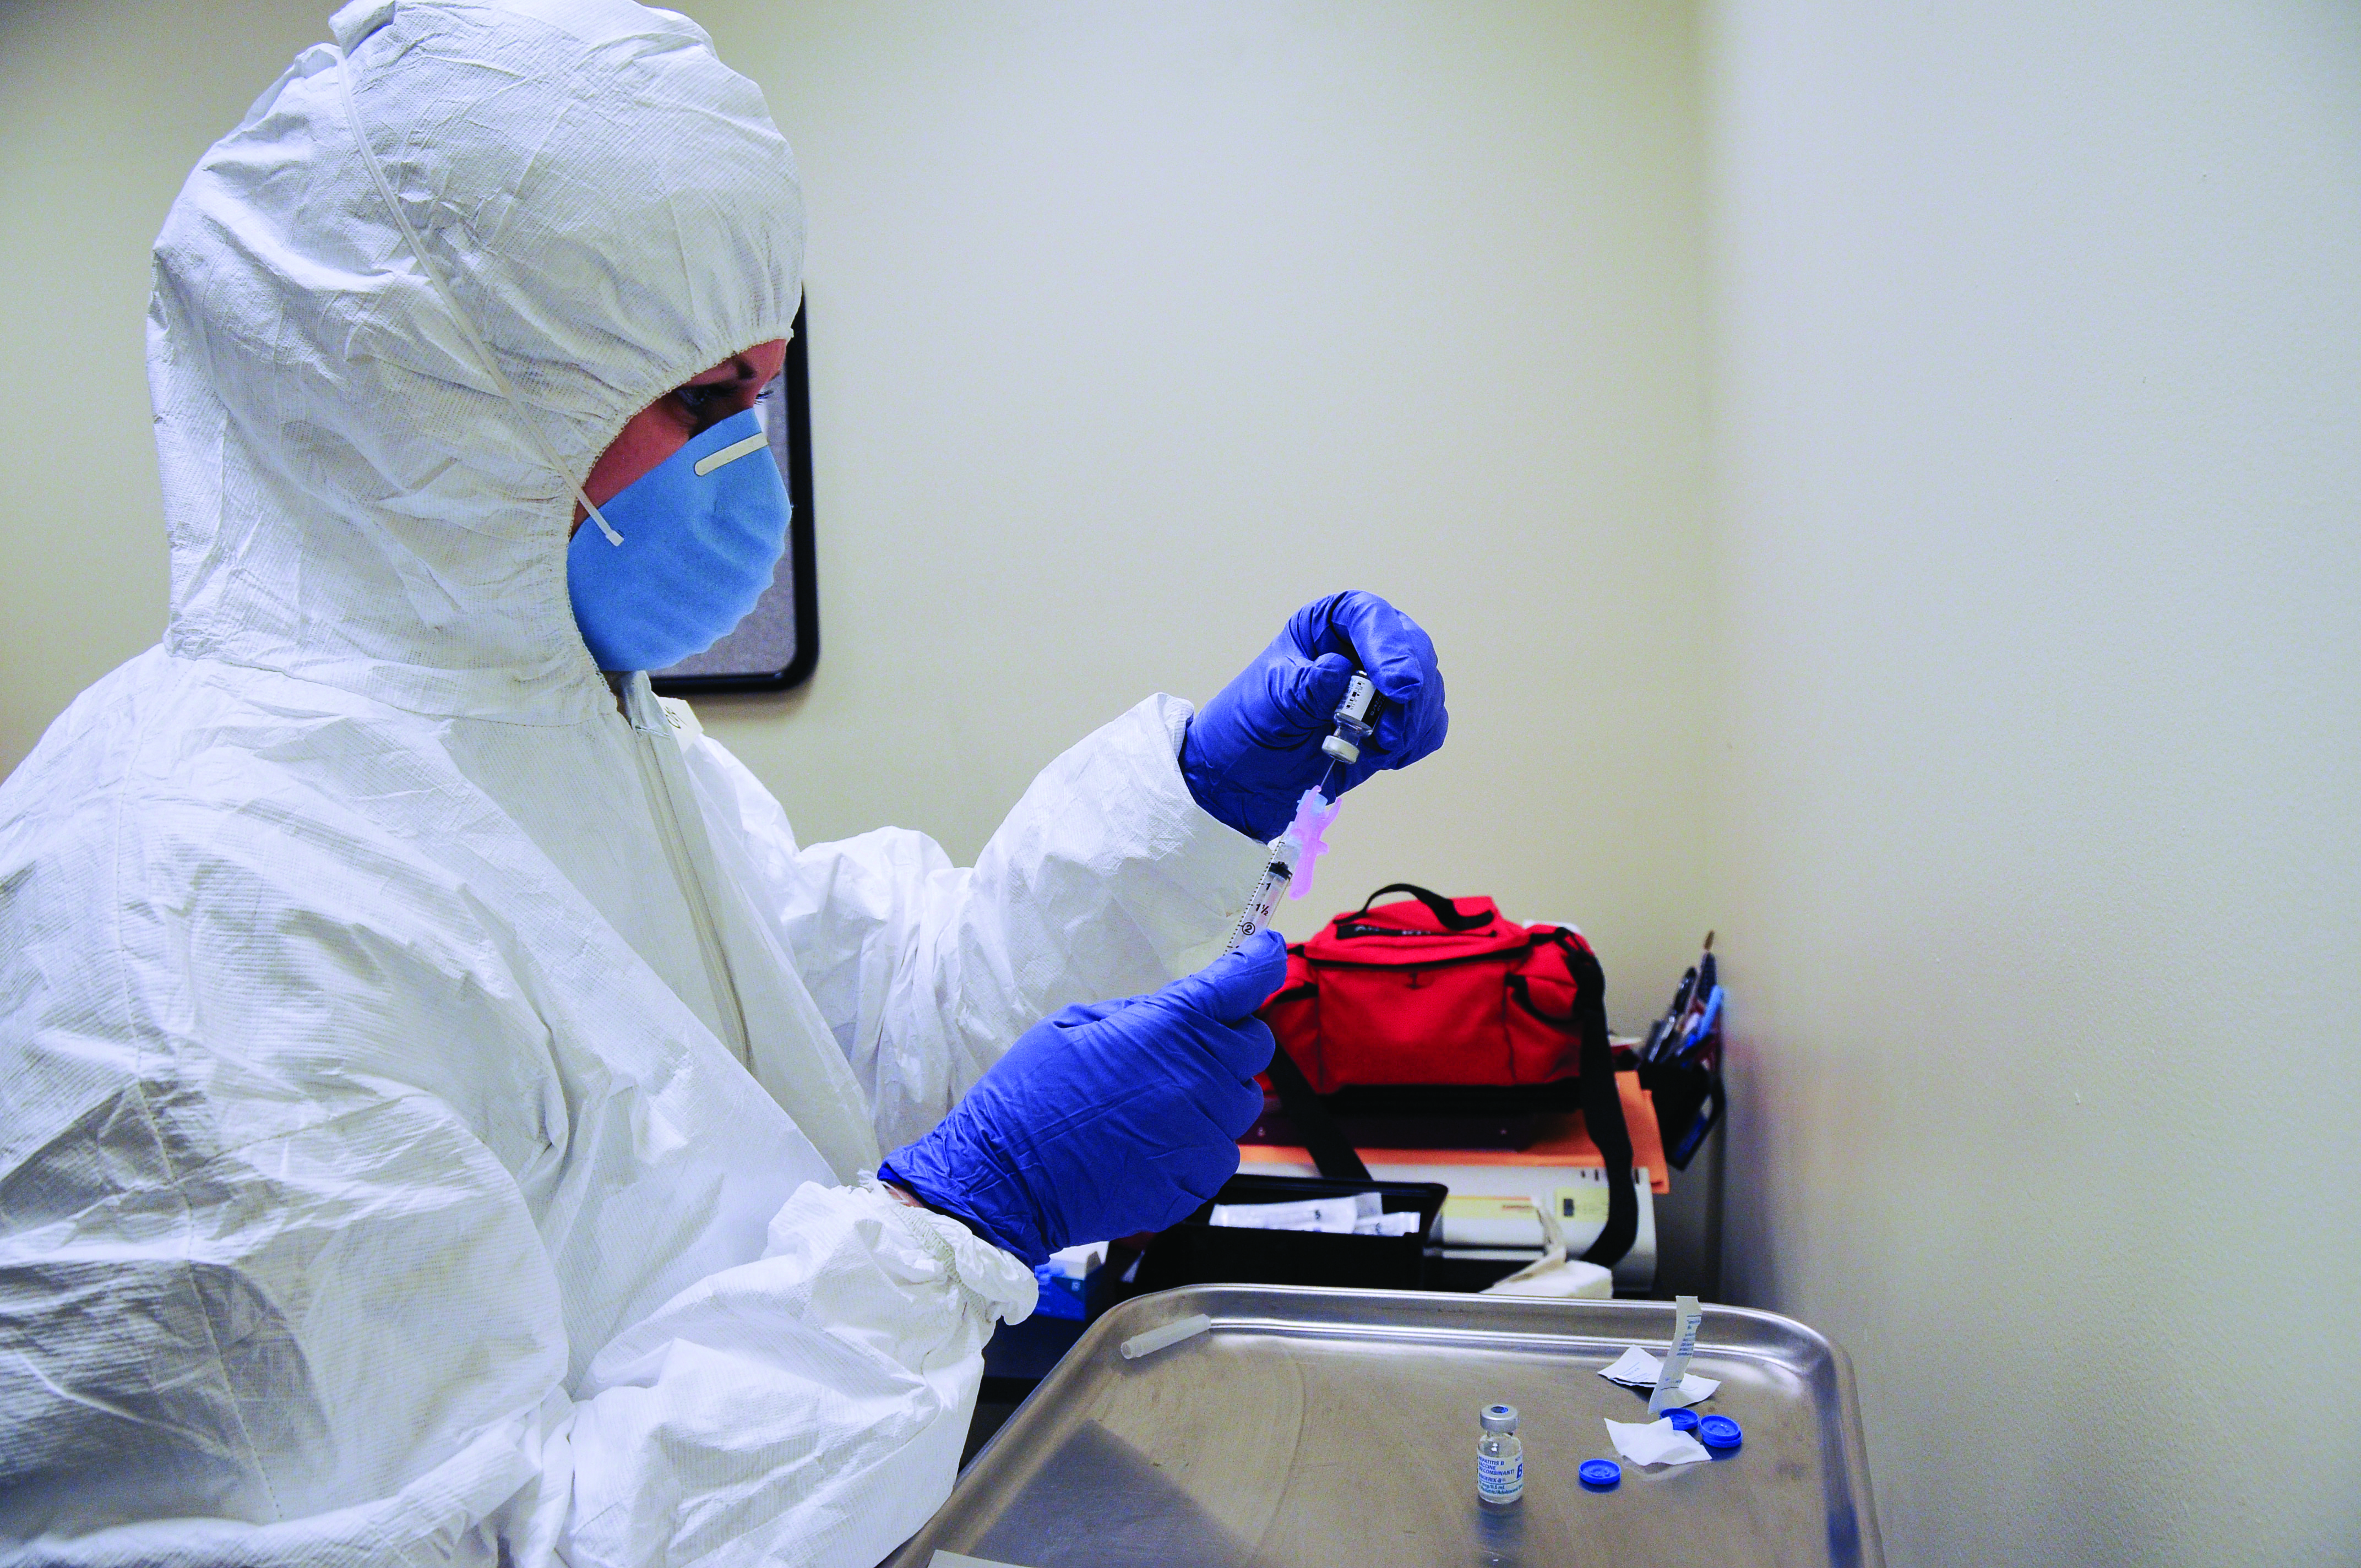 Image of individual in bio hazard suit, syringe in hand